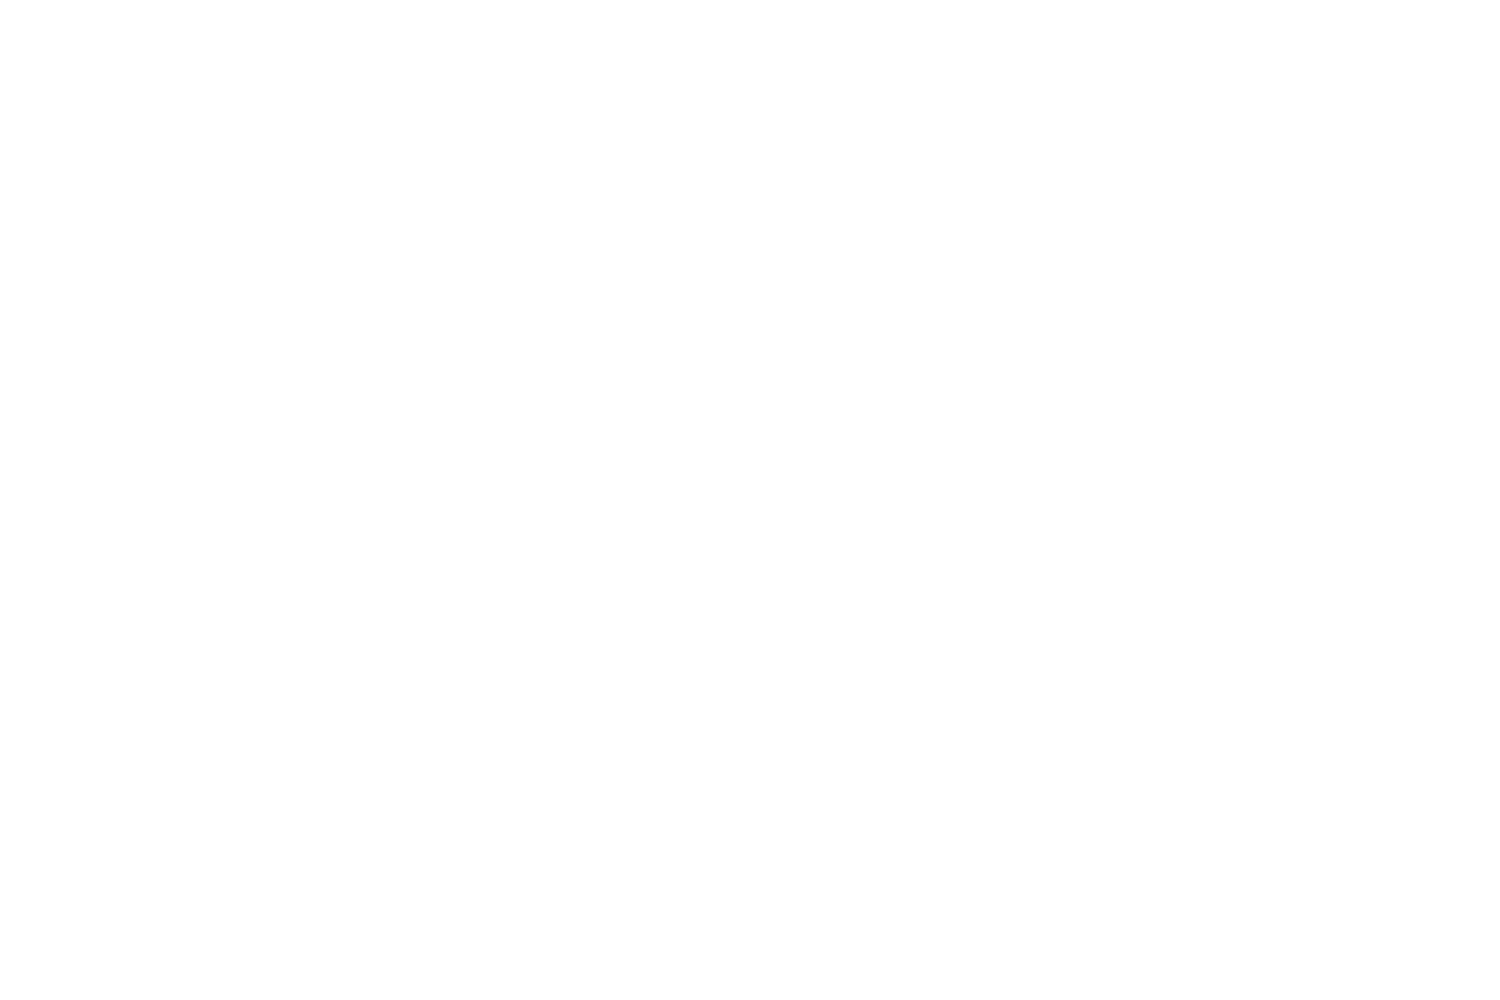 CHO PHOTOGRAPHY